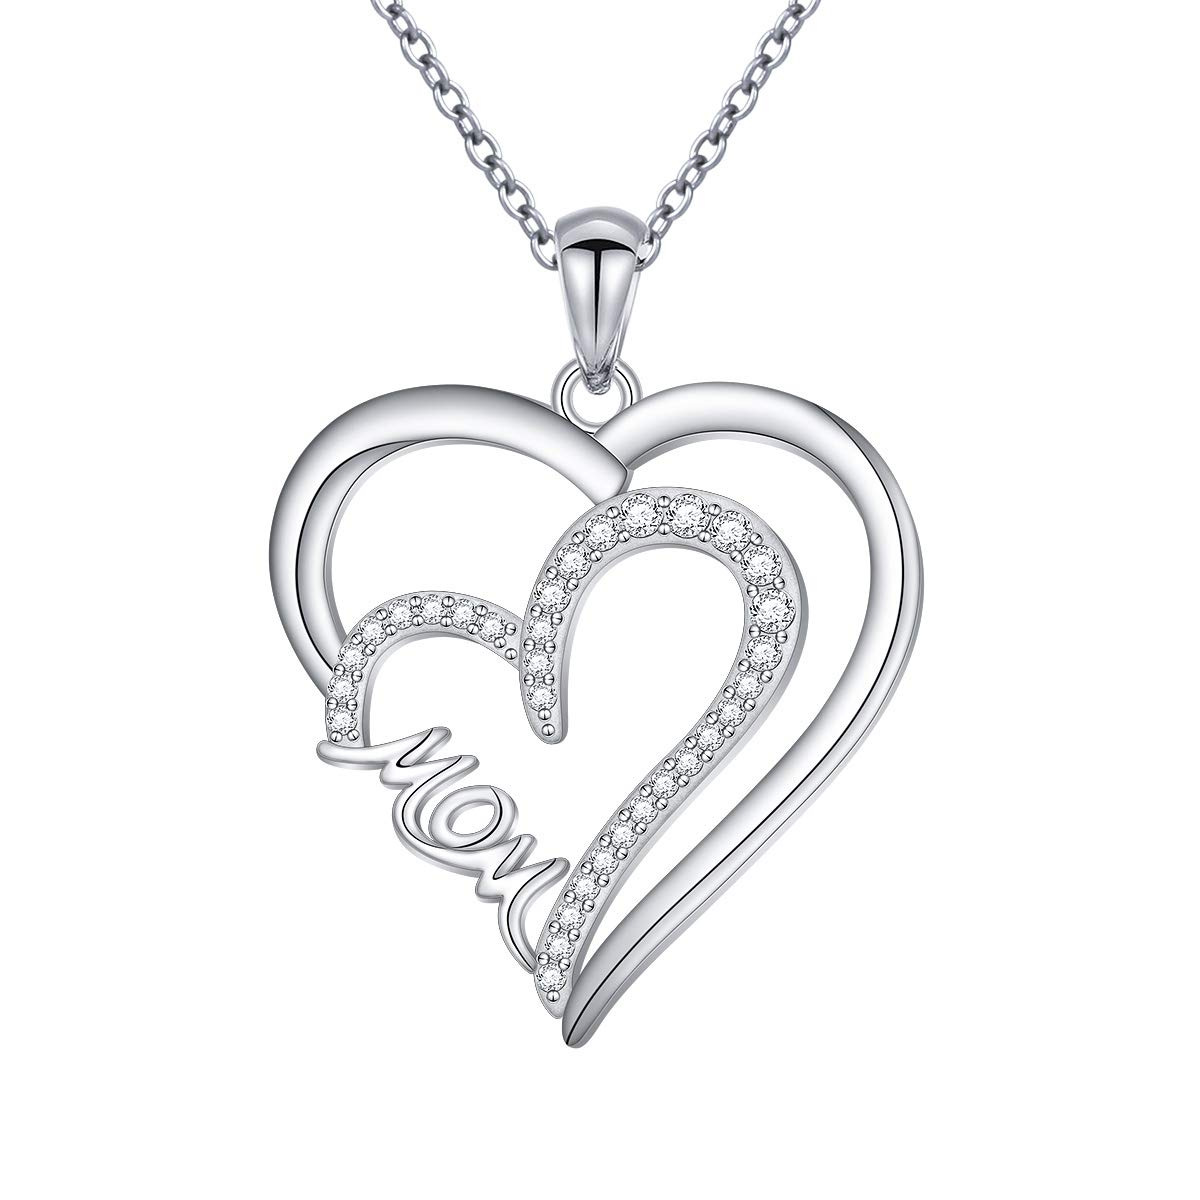 Cz MOM Love Heart Sterling Silver Pendant - DAPZ006. Free Shipping ...